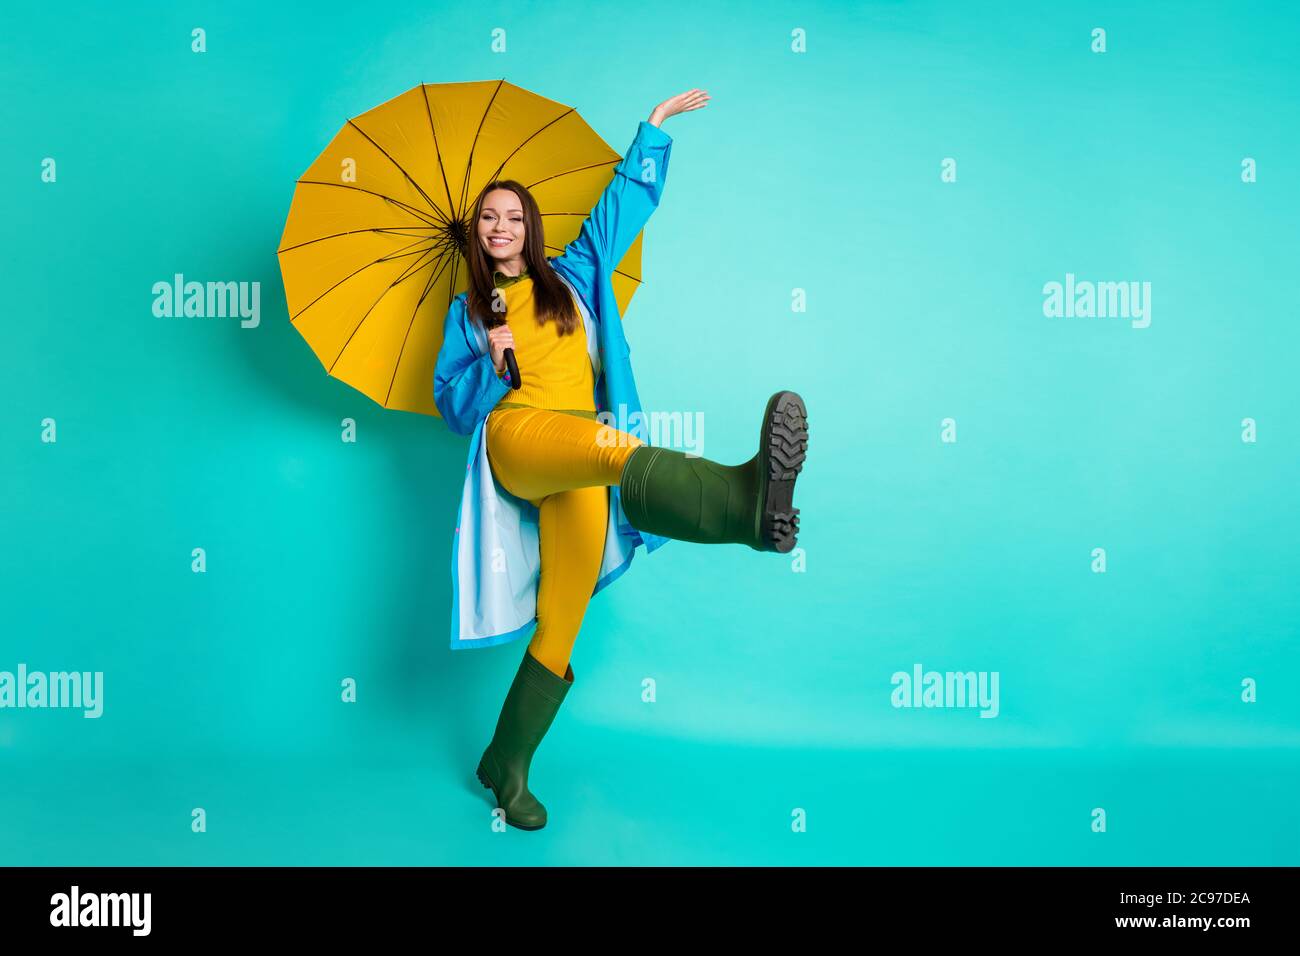 Ganzkörper-Profil-Foto der attraktiven Dame gute Laune regen Gestoppt gehen  Haube Kopf Pfützen halten große gelbe Regenschirm tragen Regenmantel  Pullover Hose Gummi Stockfotografie - Alamy